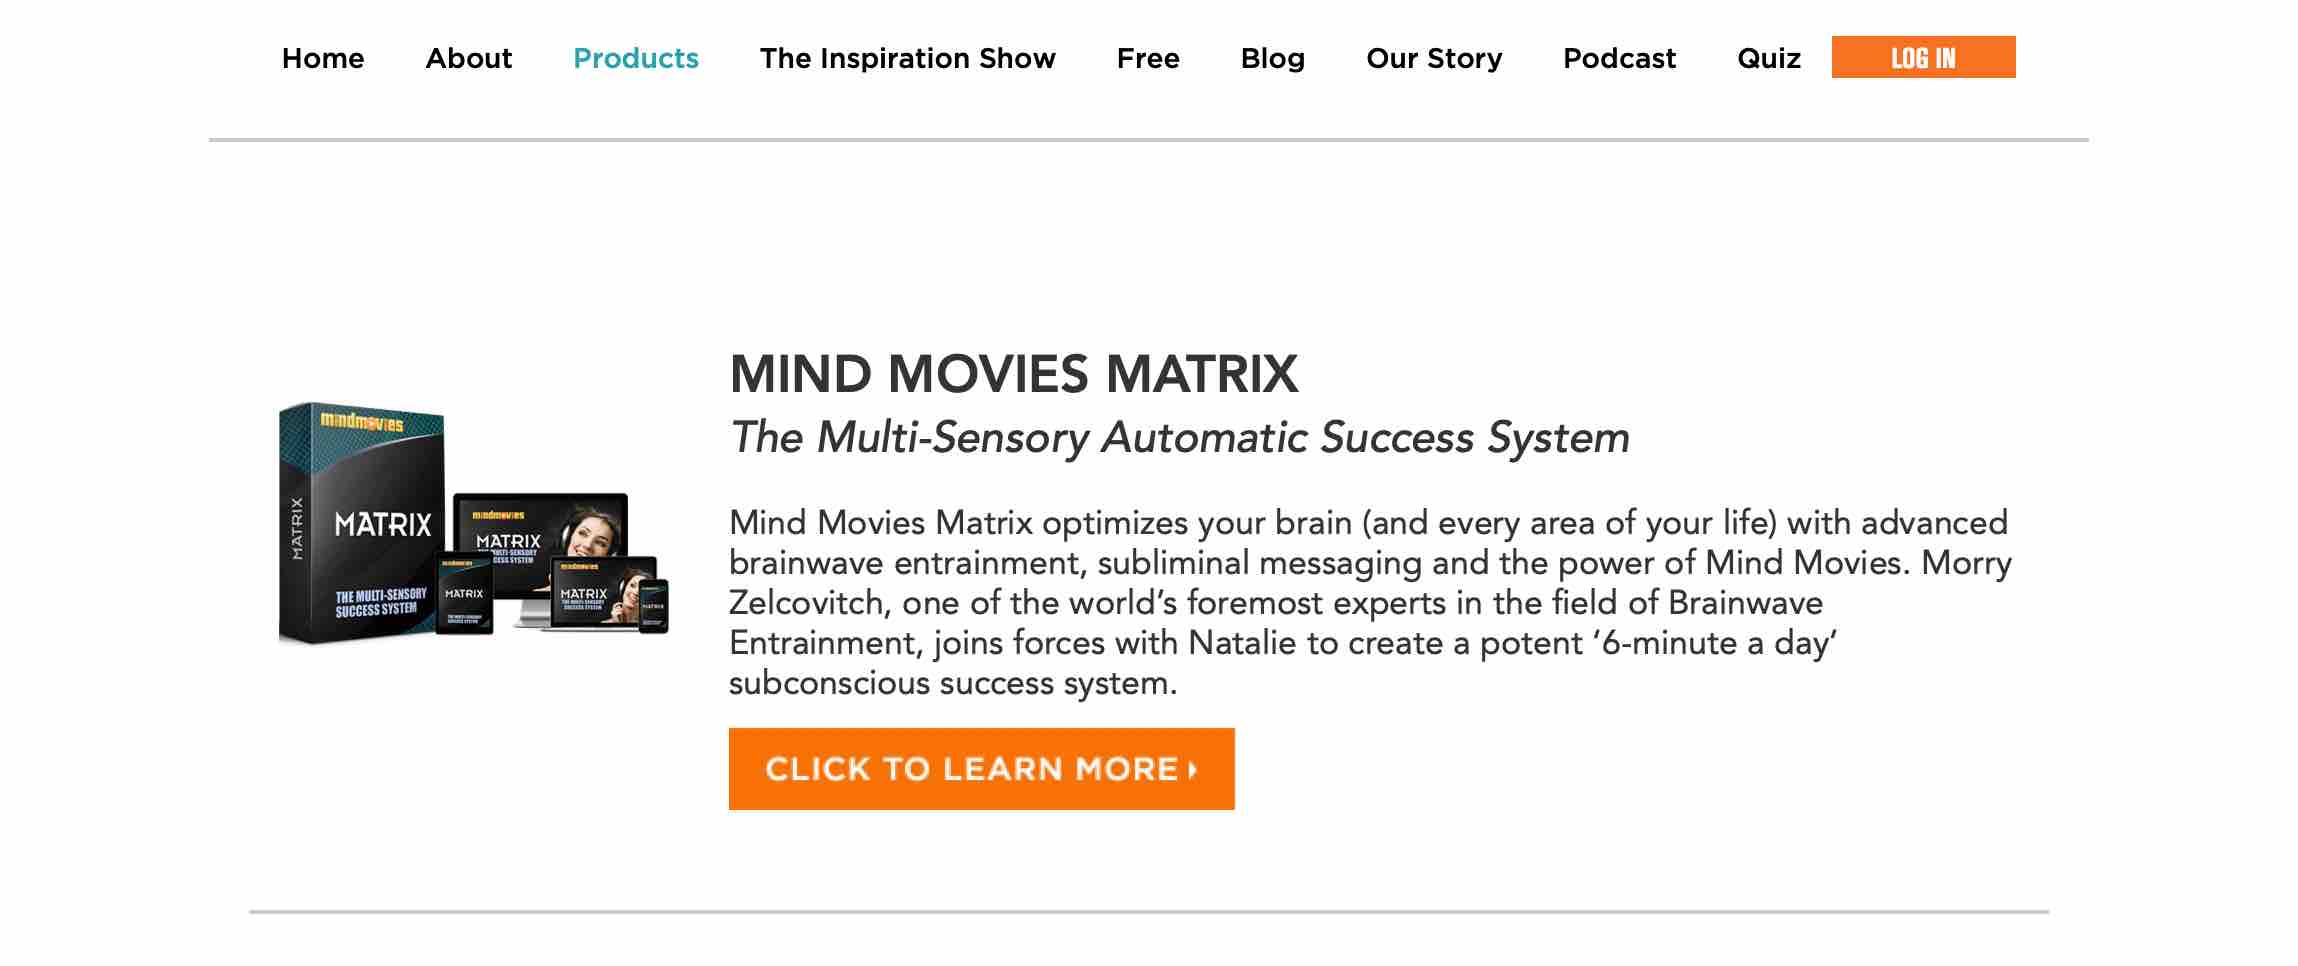 Mind Movies Matrix: The Multi-Sensory Automatic Success System